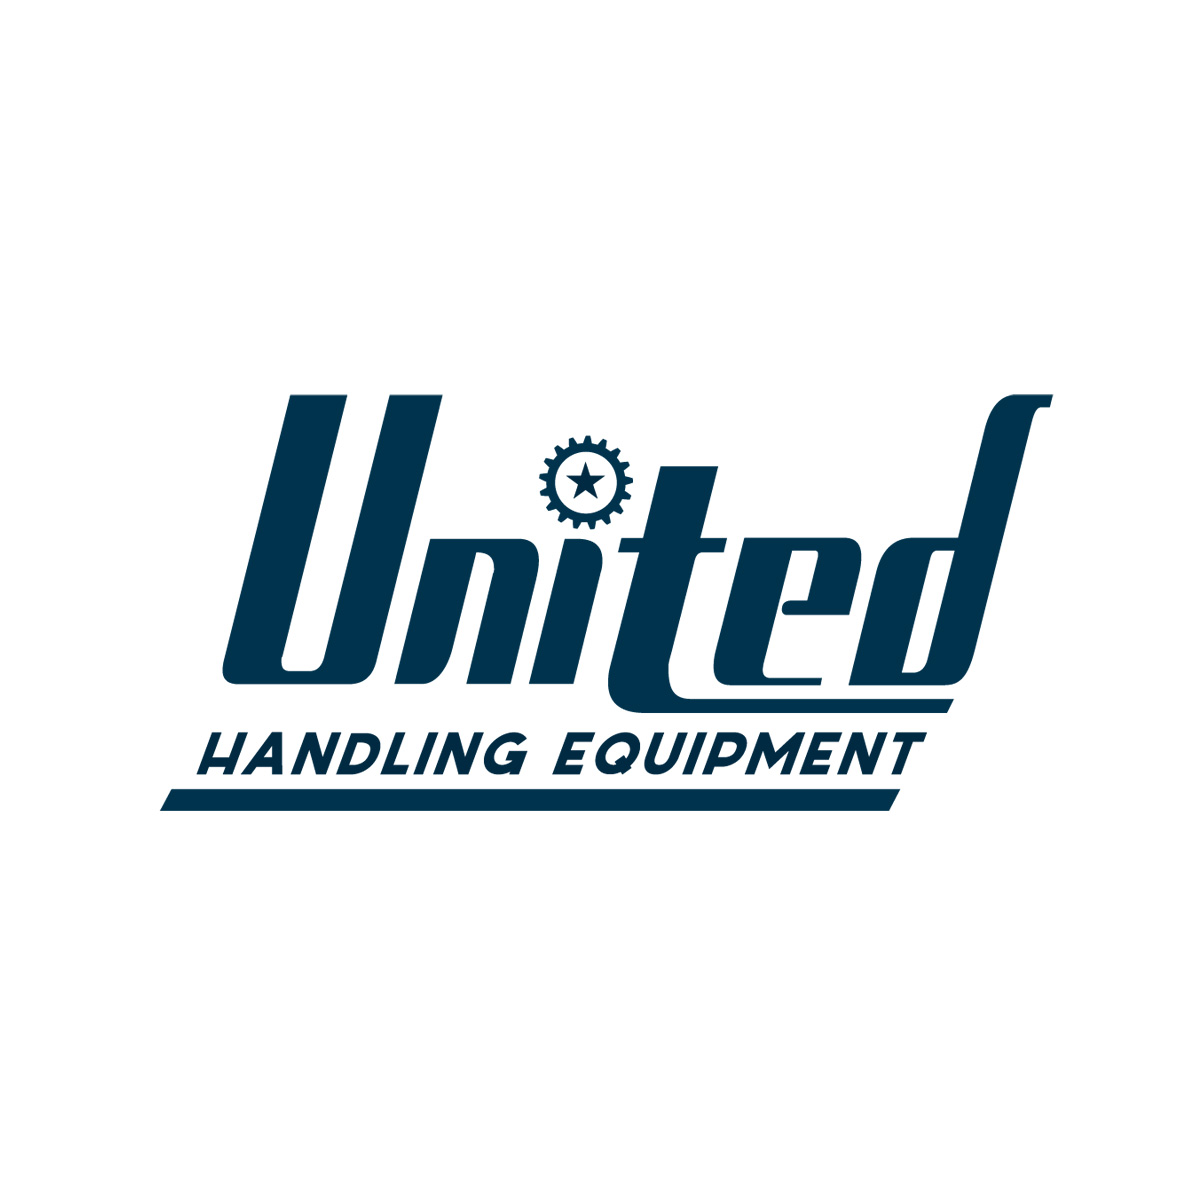 United Handling Equipment typographic logo